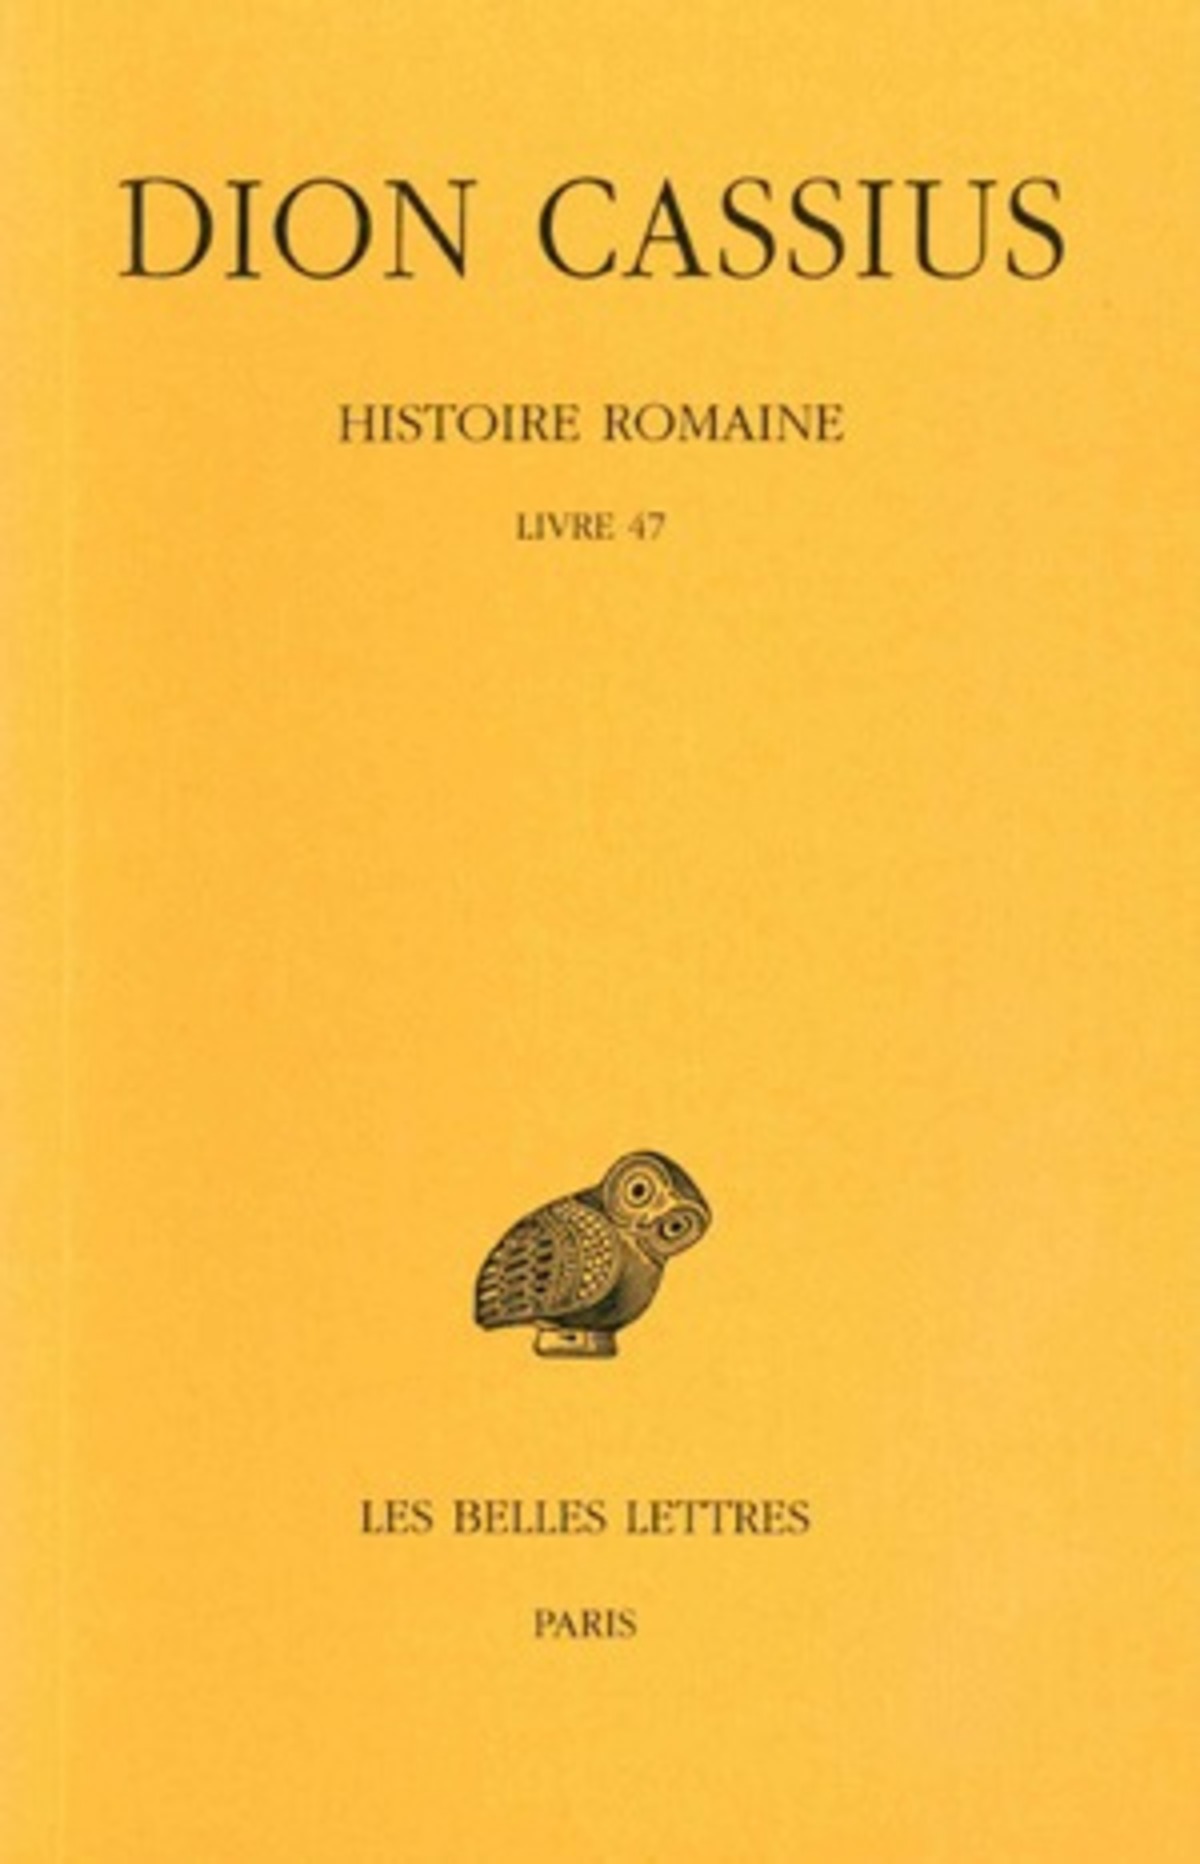 Histoire romaine. Livre 47